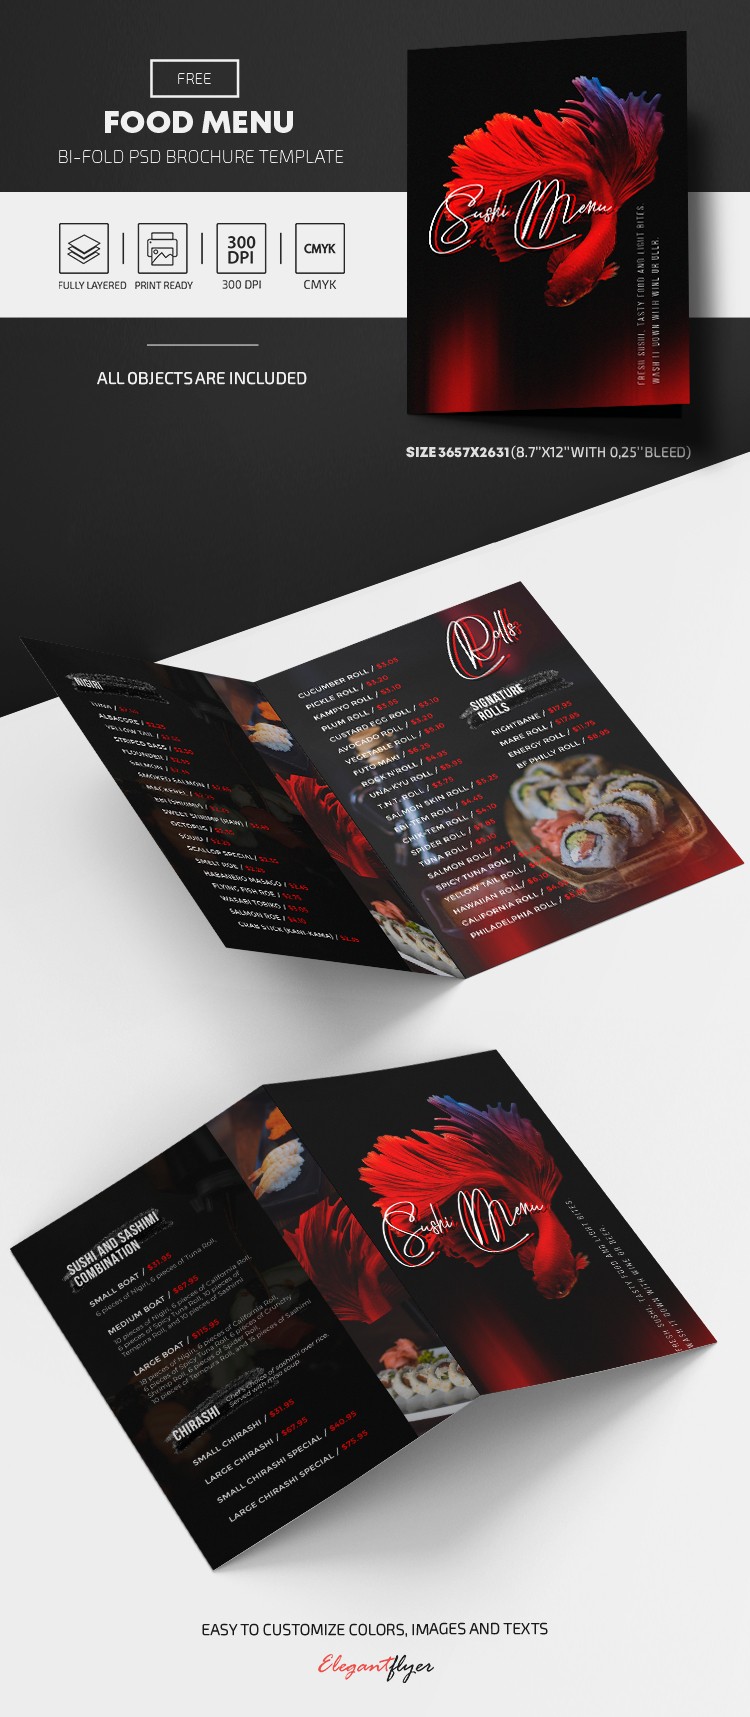 Food Menu Bi-Fold Brochure by ElegantFlyer